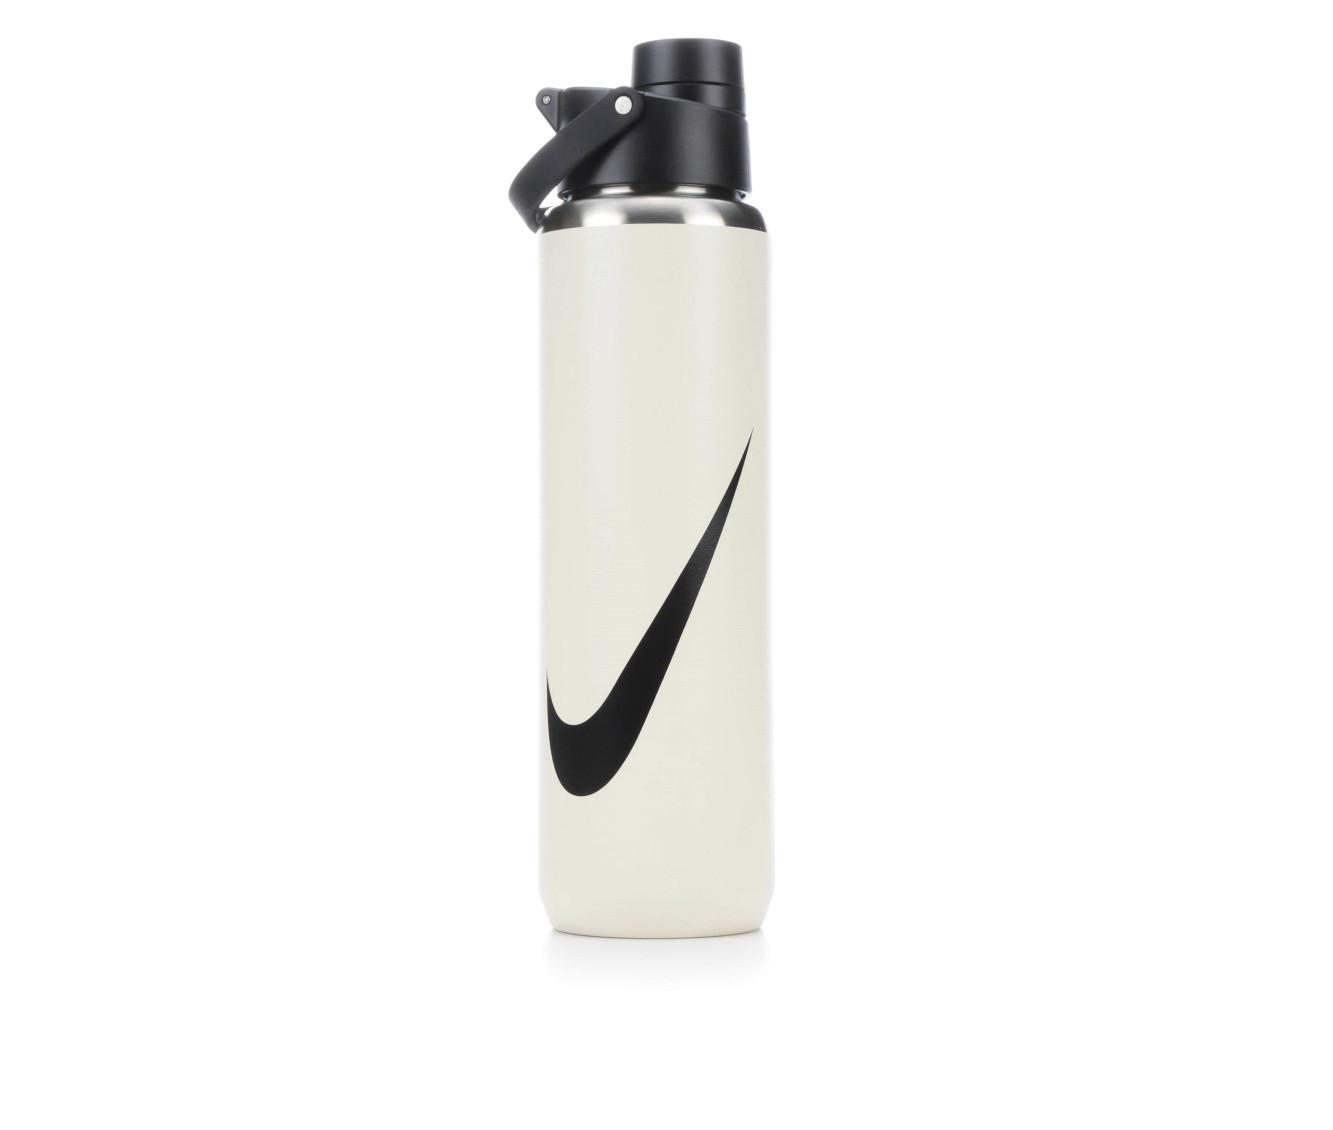 Nike Recharge 32-oz. Stainless Steel Chug Bottle